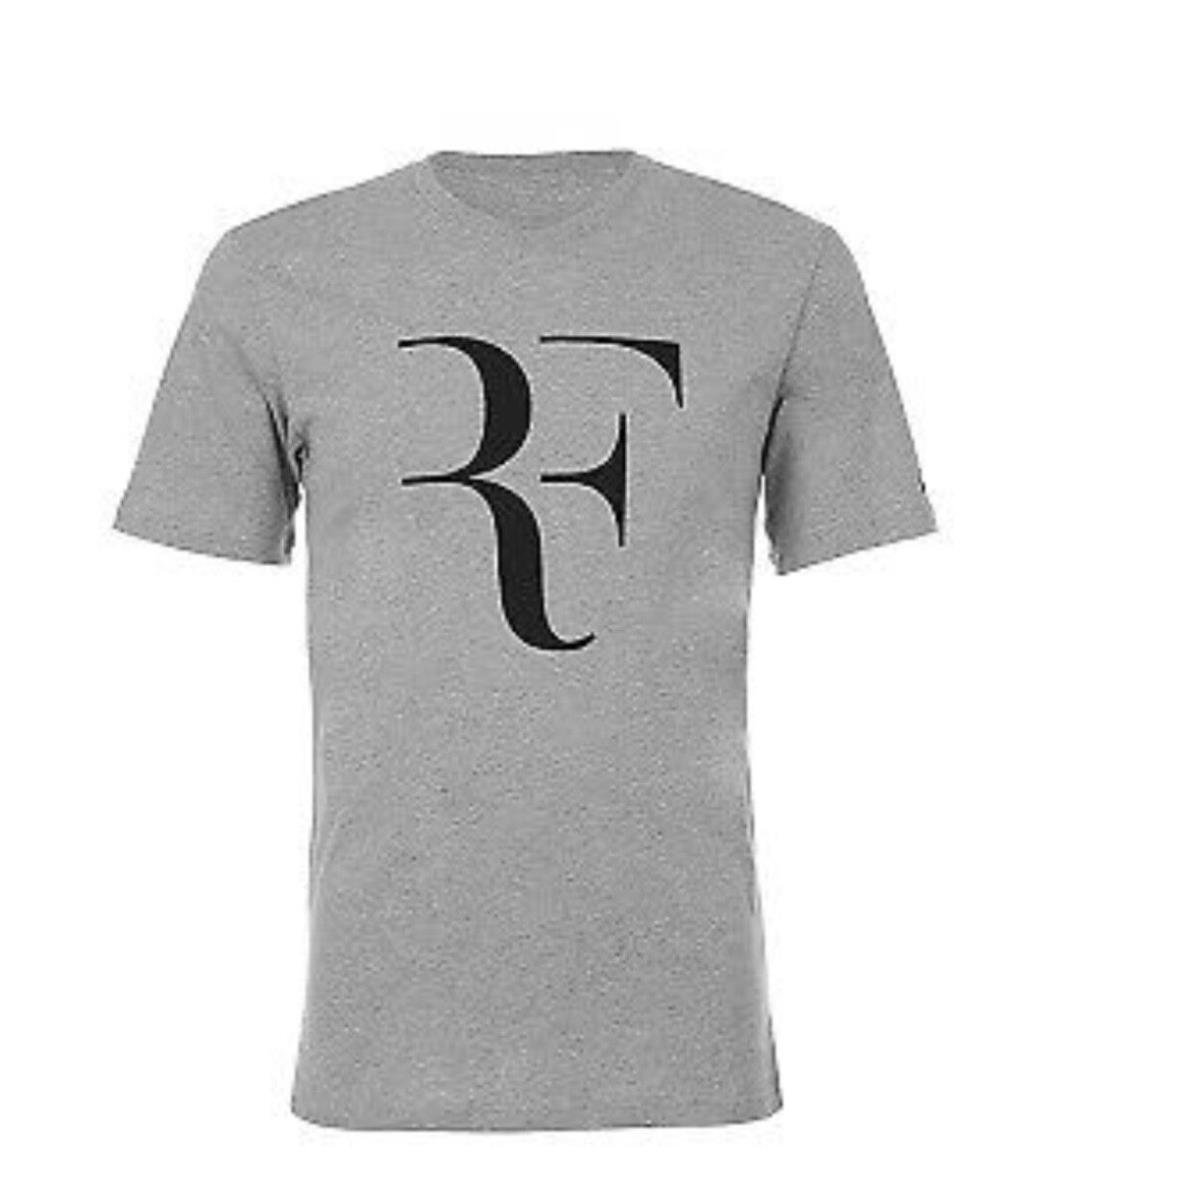 Nike Roger Federer Court RF Tennis Shirt Gray-black 2009 Rare 363675-064 XL